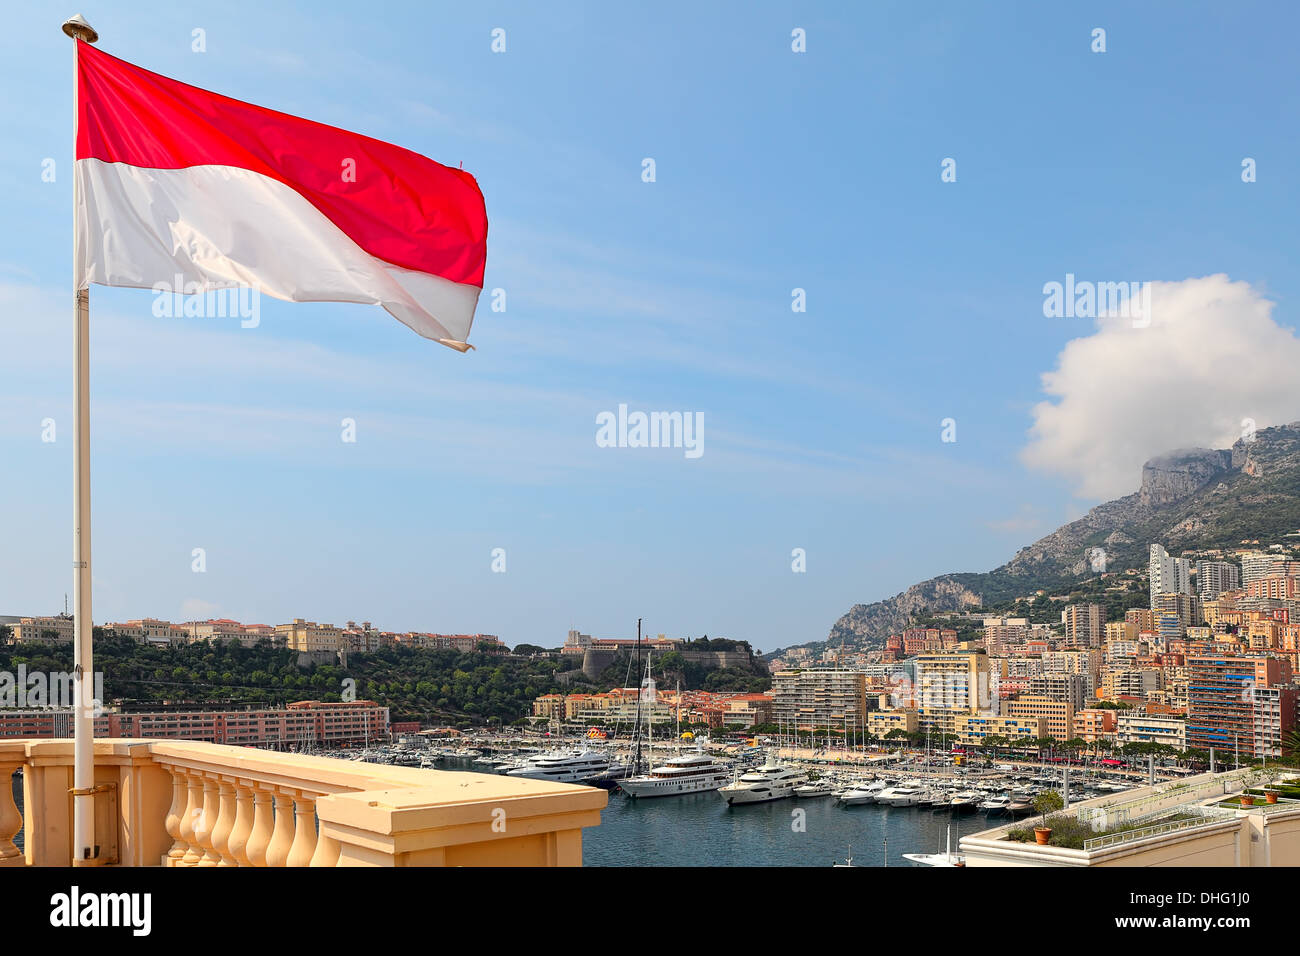 National flag, modern residential buildings and luxury yachts in Port Hercule under blue sky in Monte Carlo, Monaco. Stock Photo